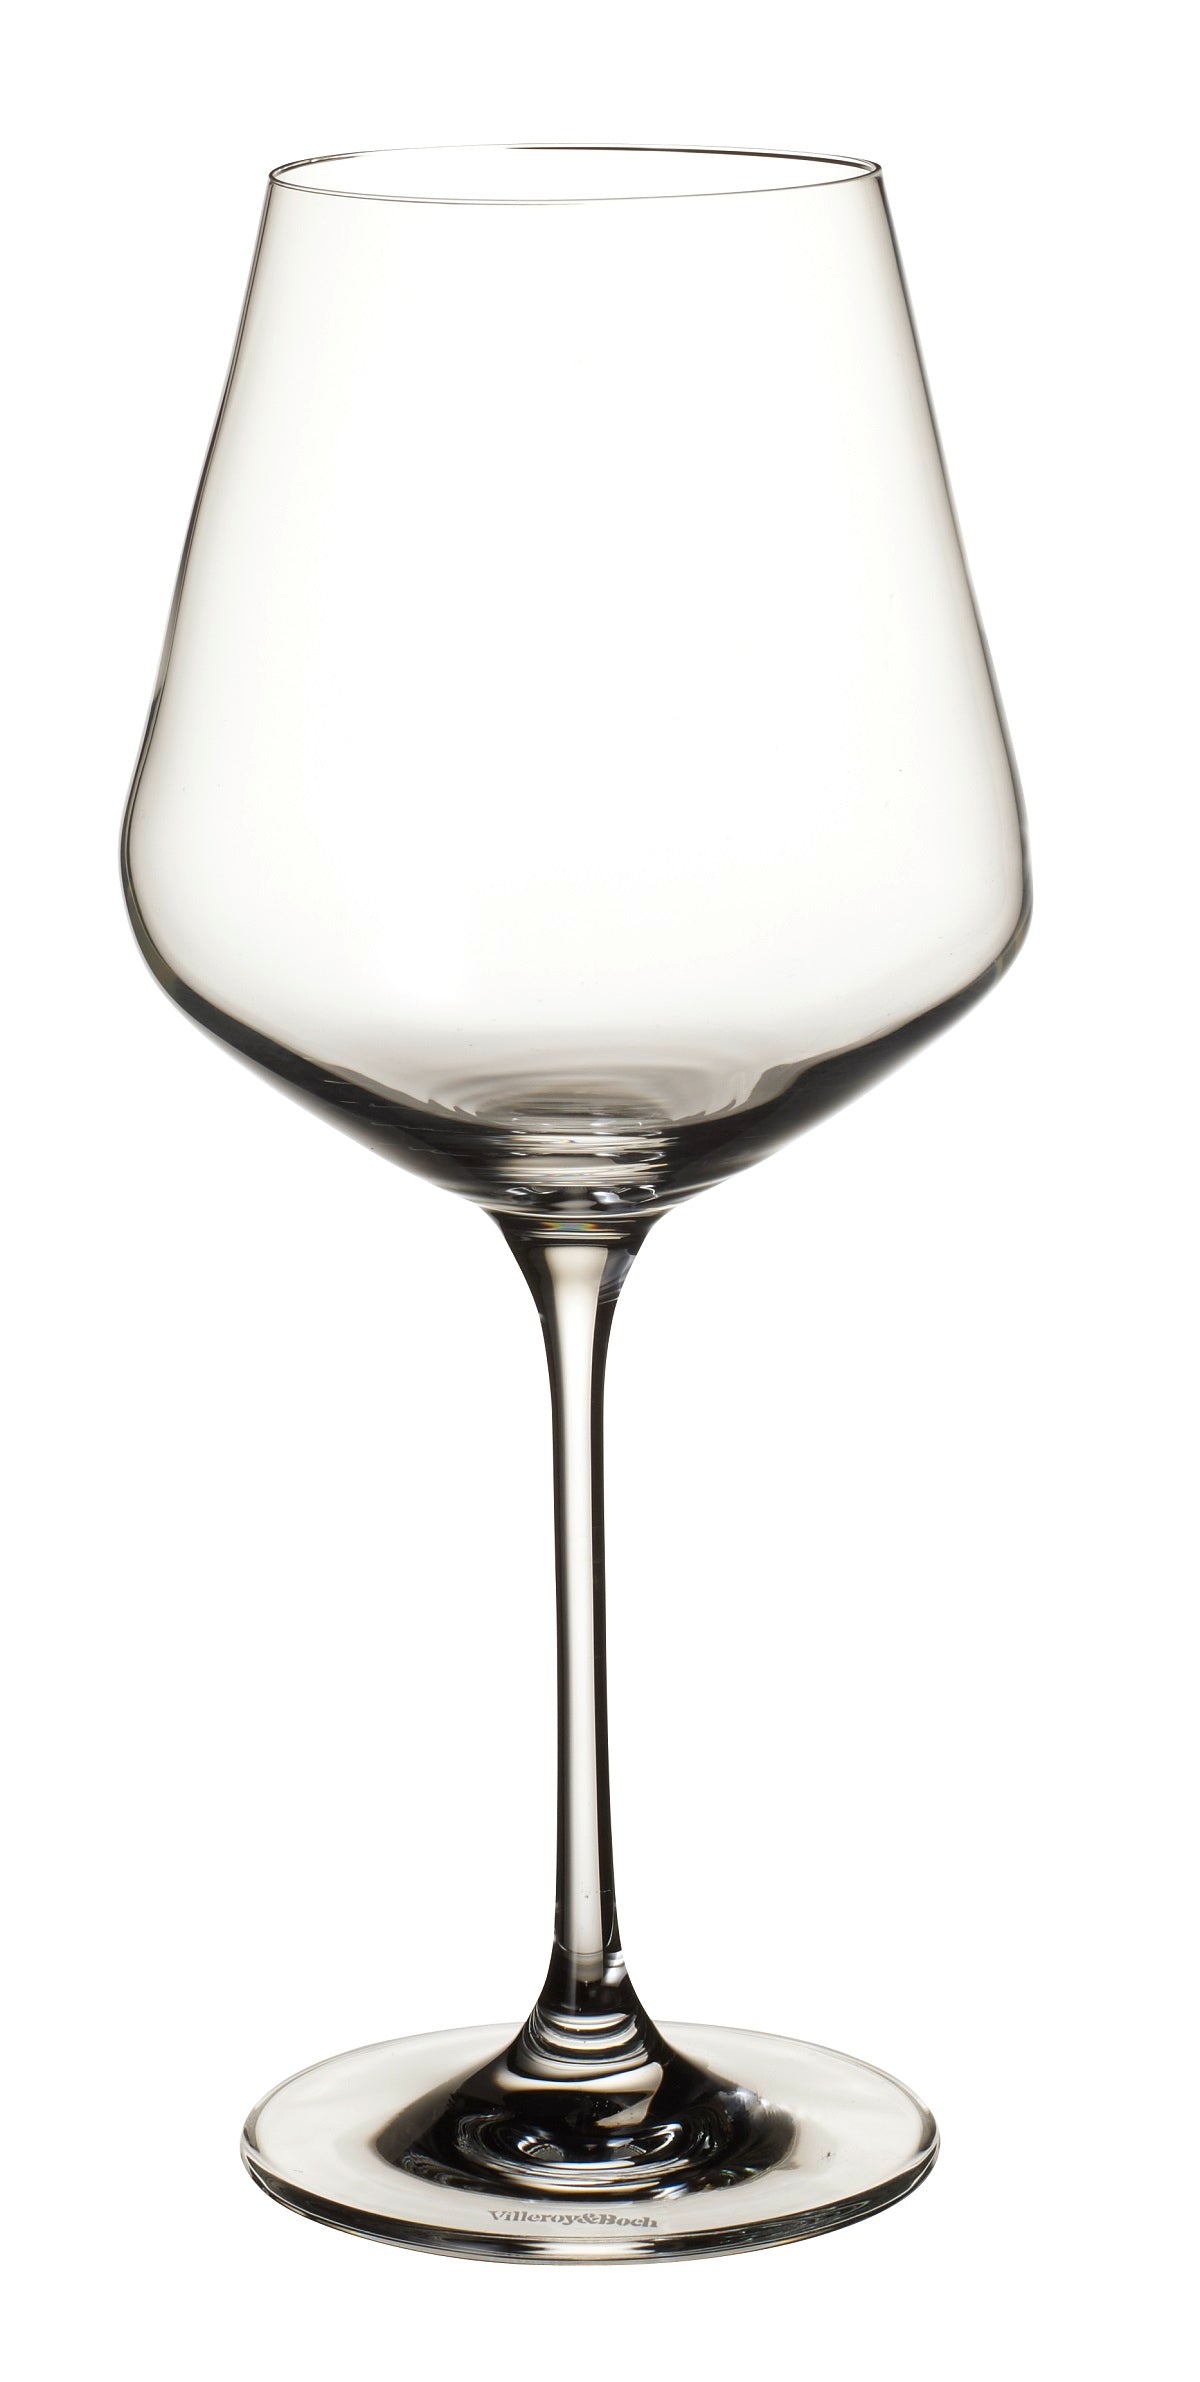 Villeroy &amp; Boch La Divina red wine glass, Set of 4 pieces